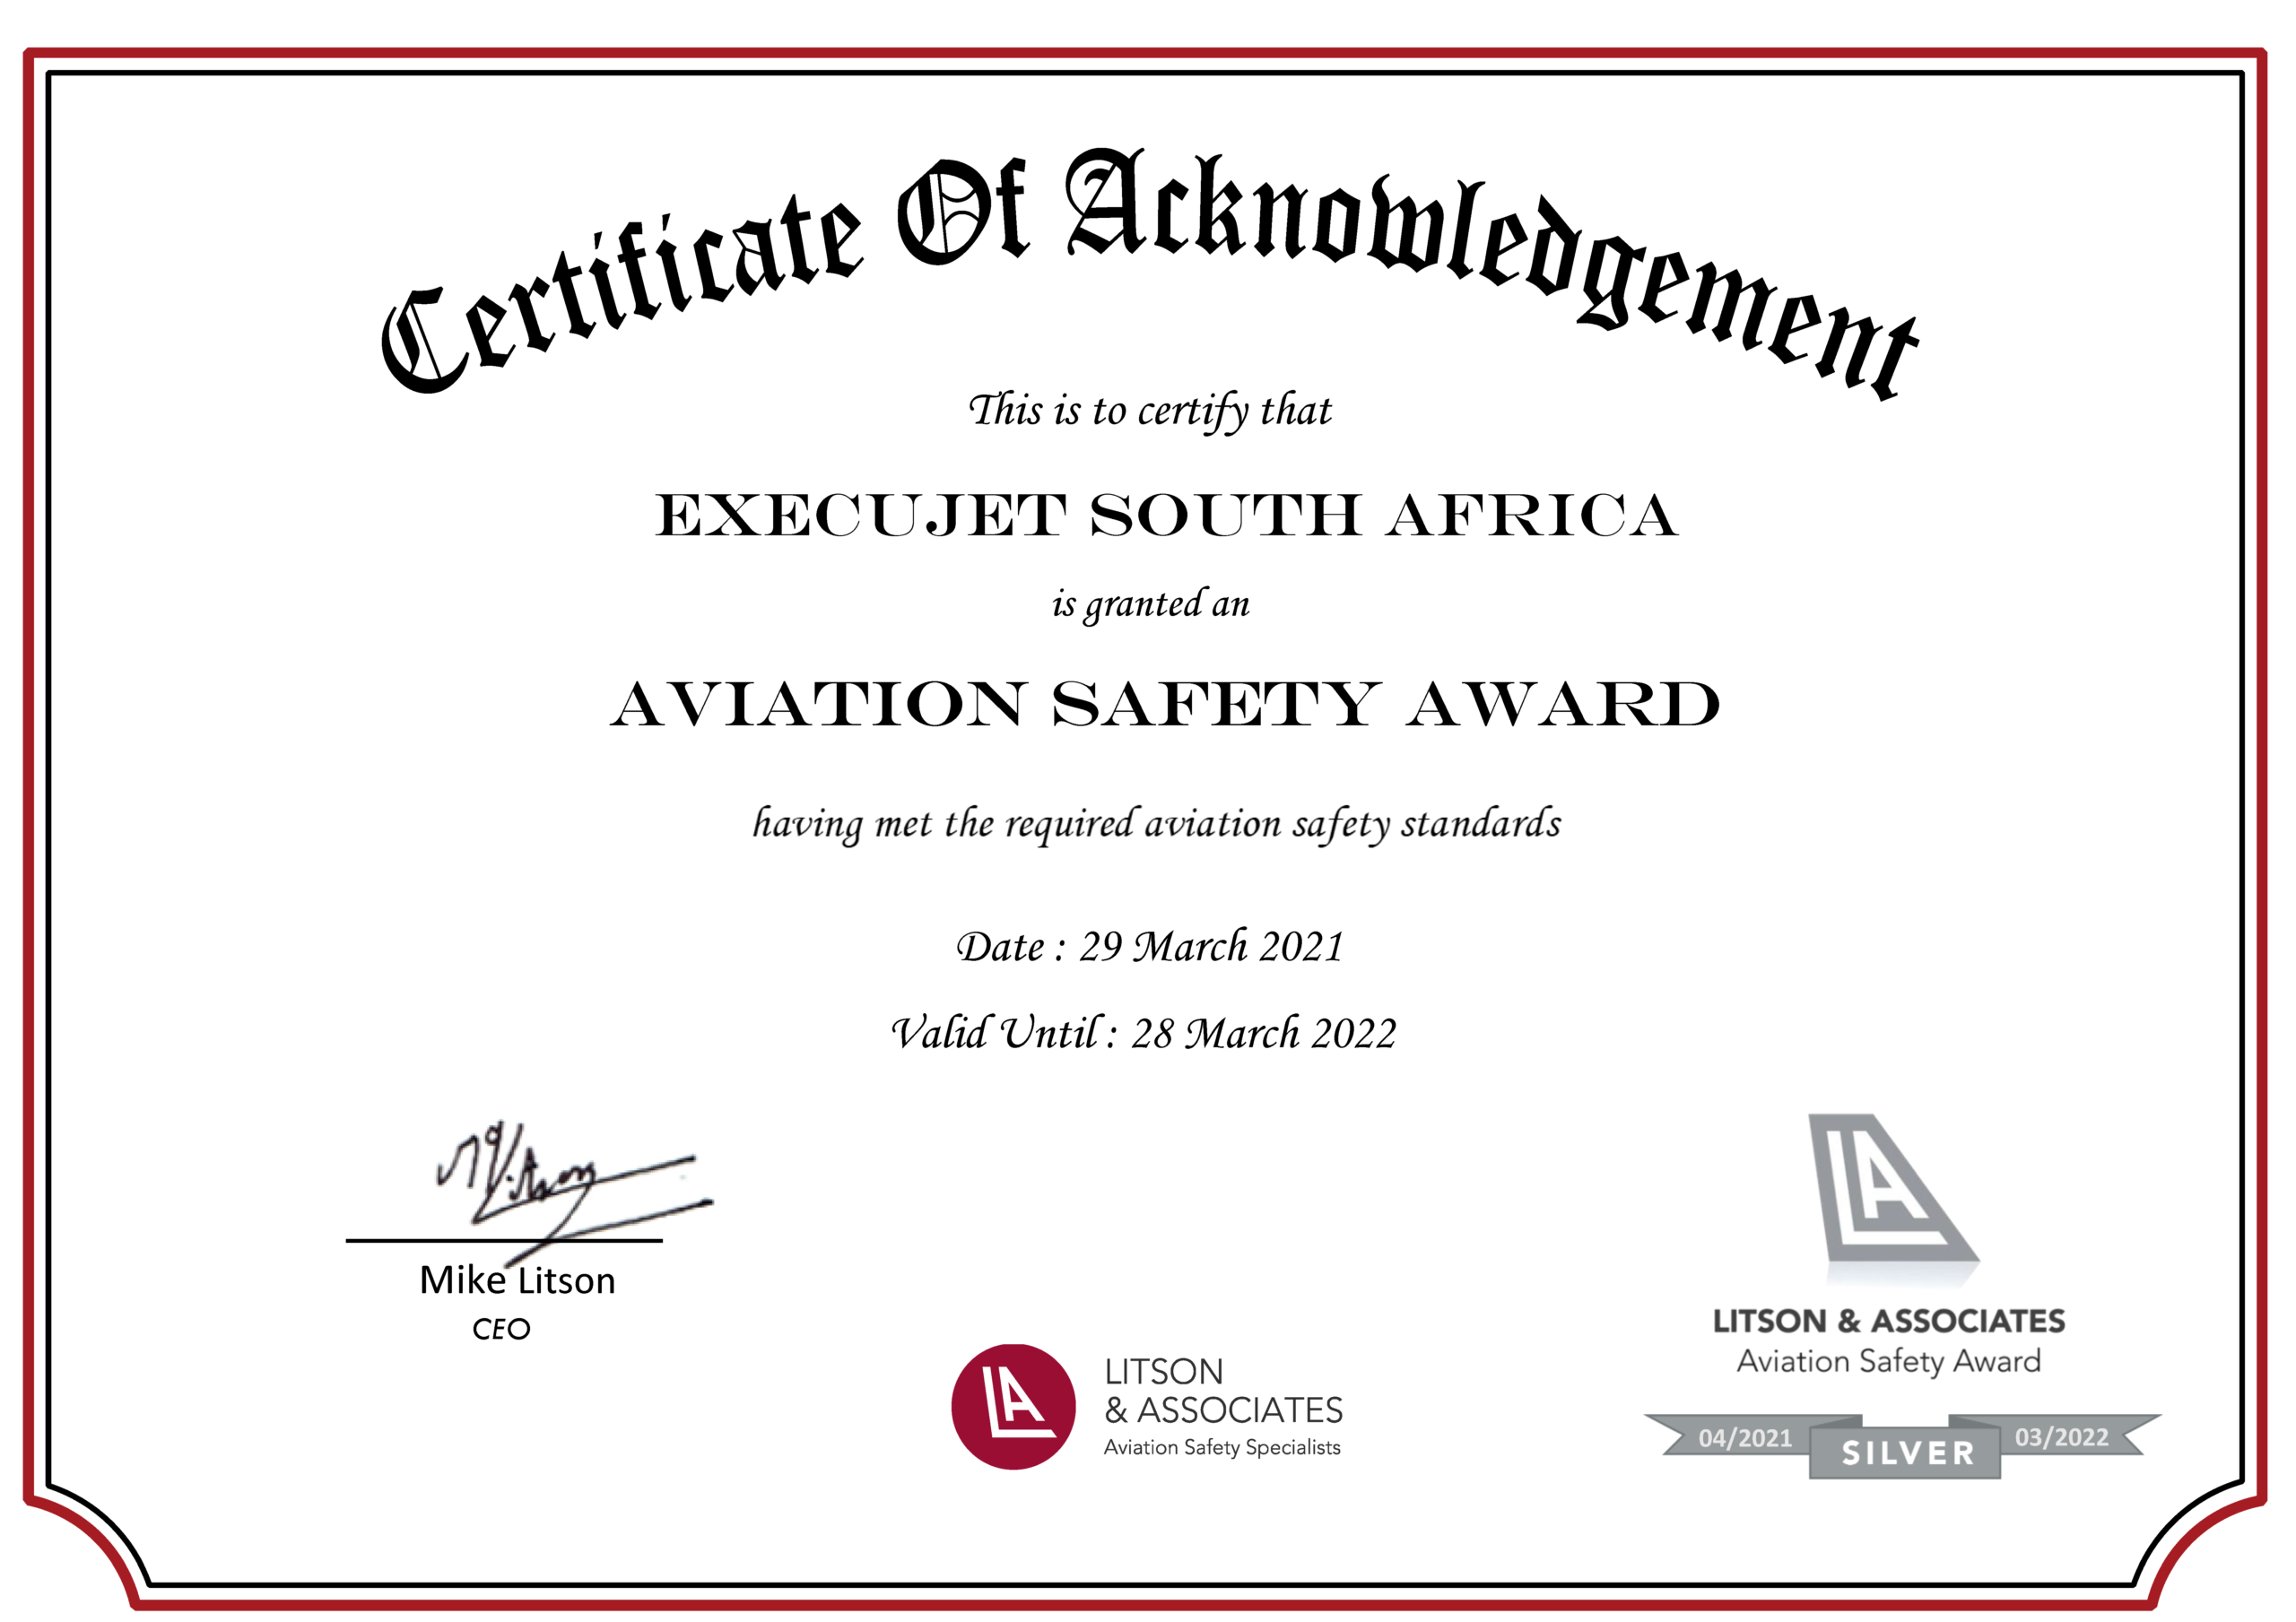 ExecuJet Africa awarded Litson & Associates Silver Aviation Safety Award 